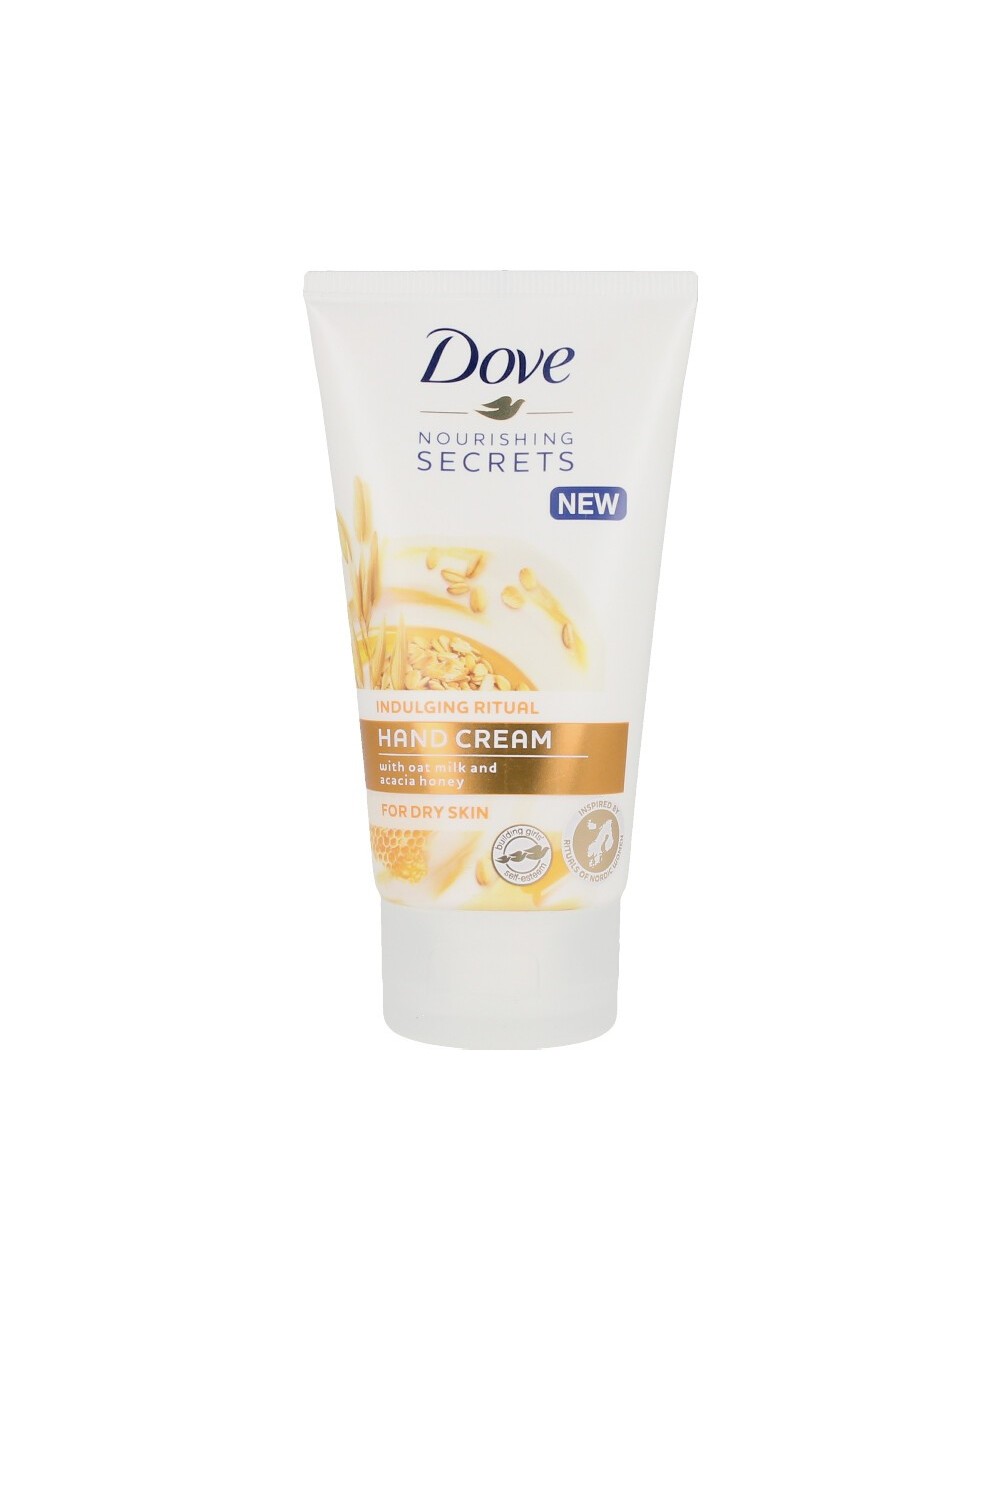 Dove Nourishing Secrets Oatmeal Hand Cream 75ml